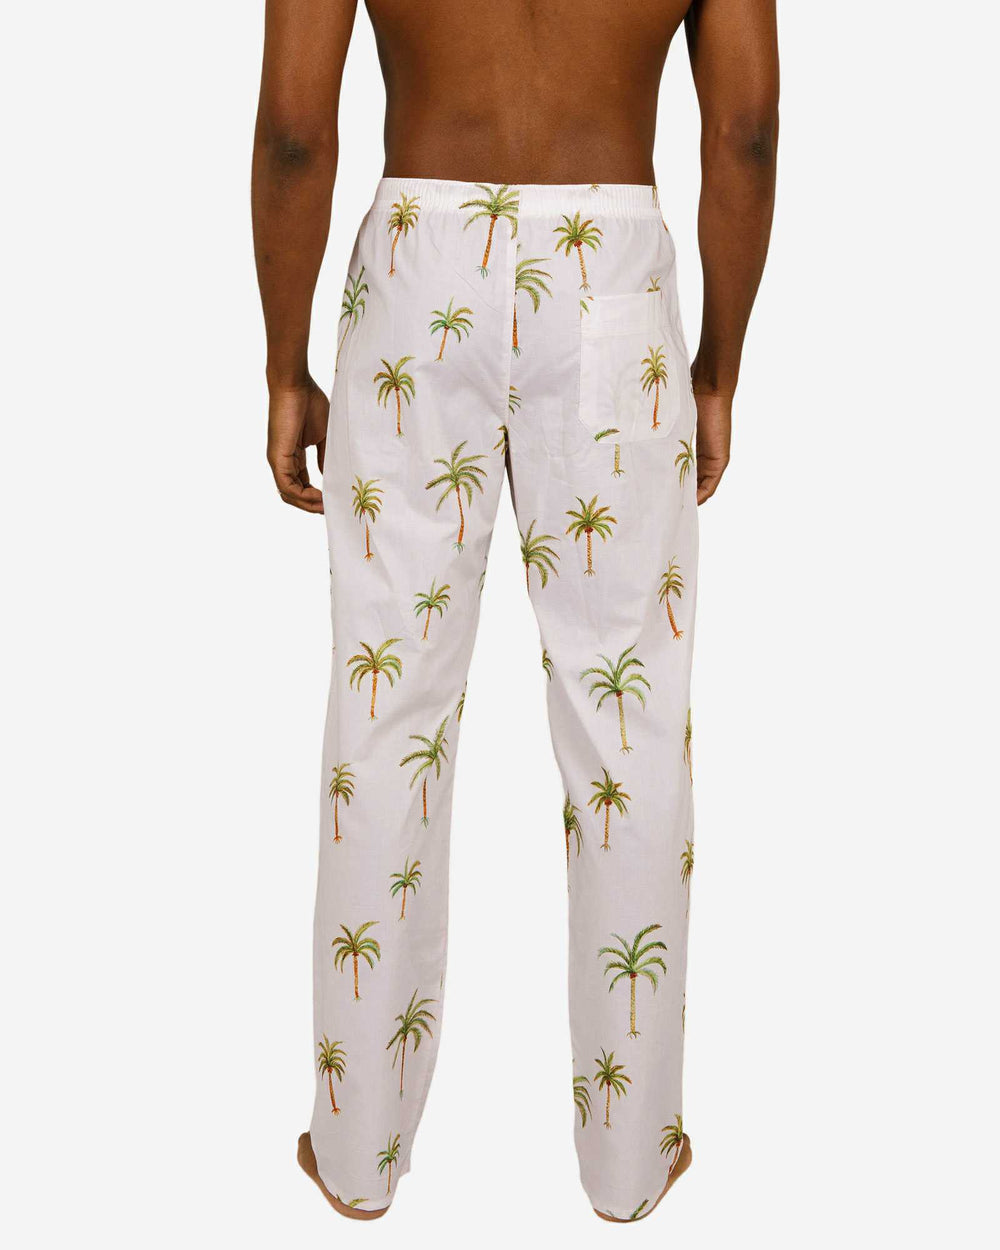 Men's Pyjama Bottoms - Palm Beach